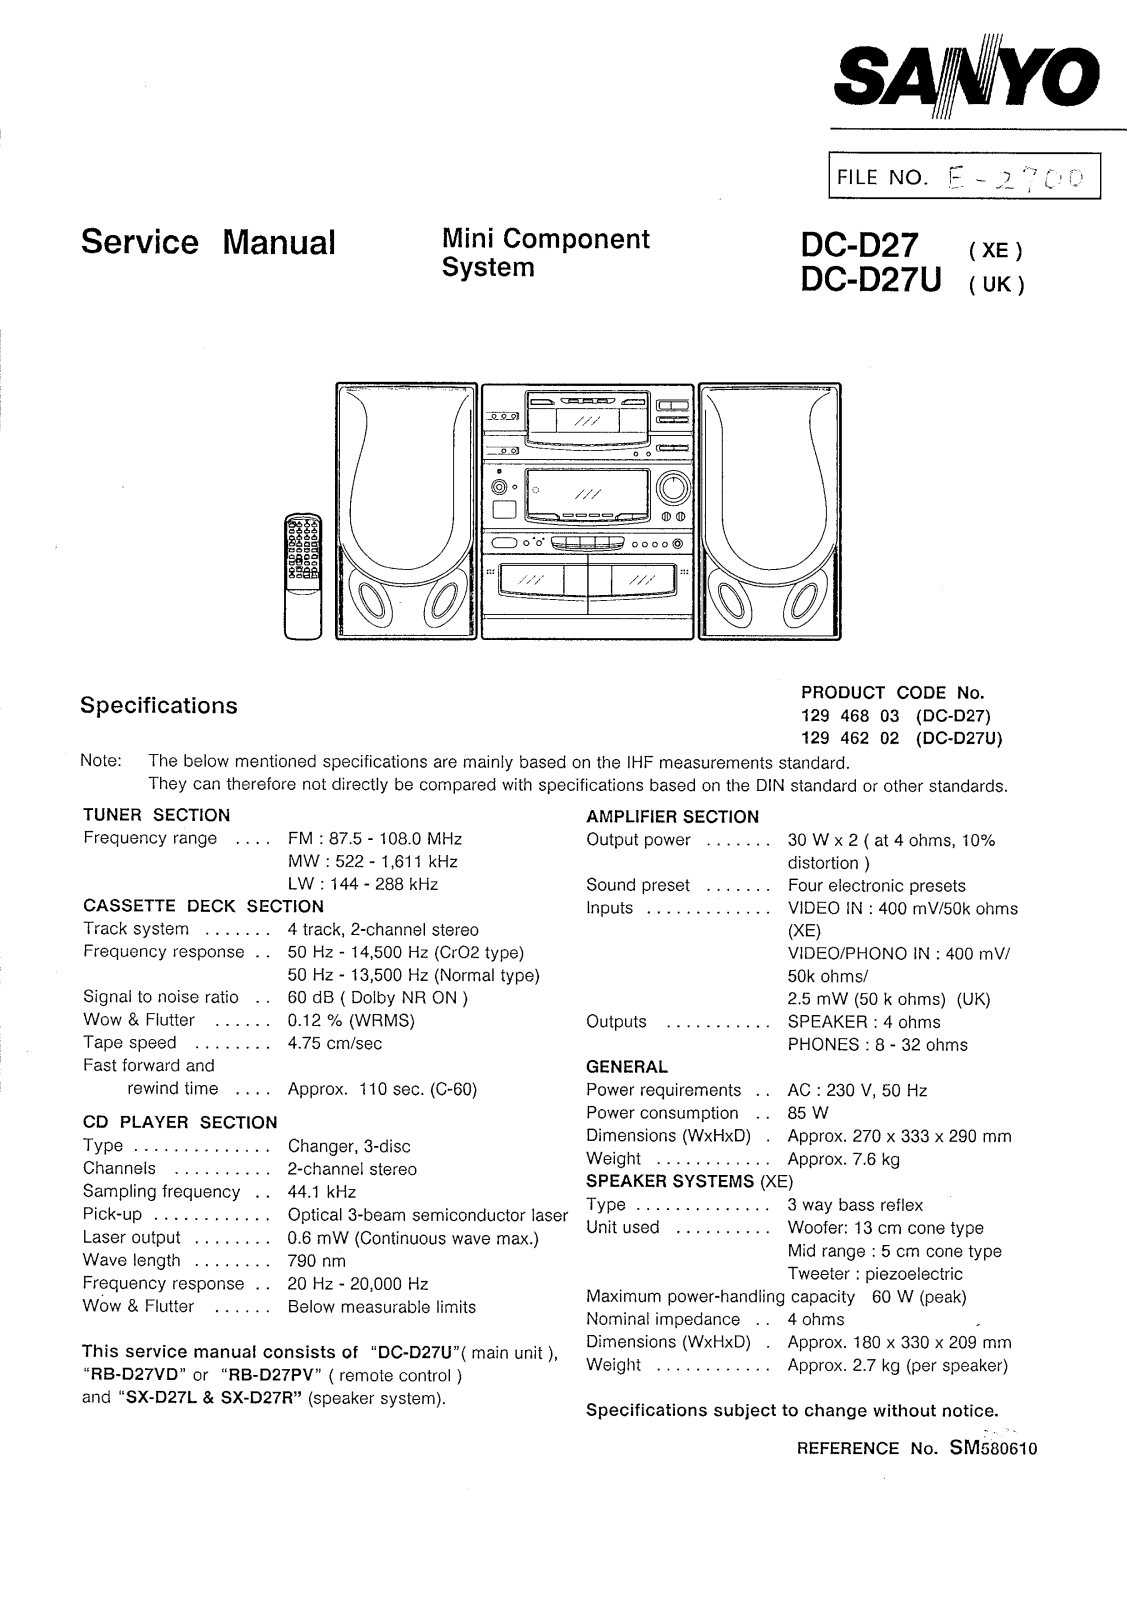 Sanyo DCD-27-U, DCD-27 Service manual